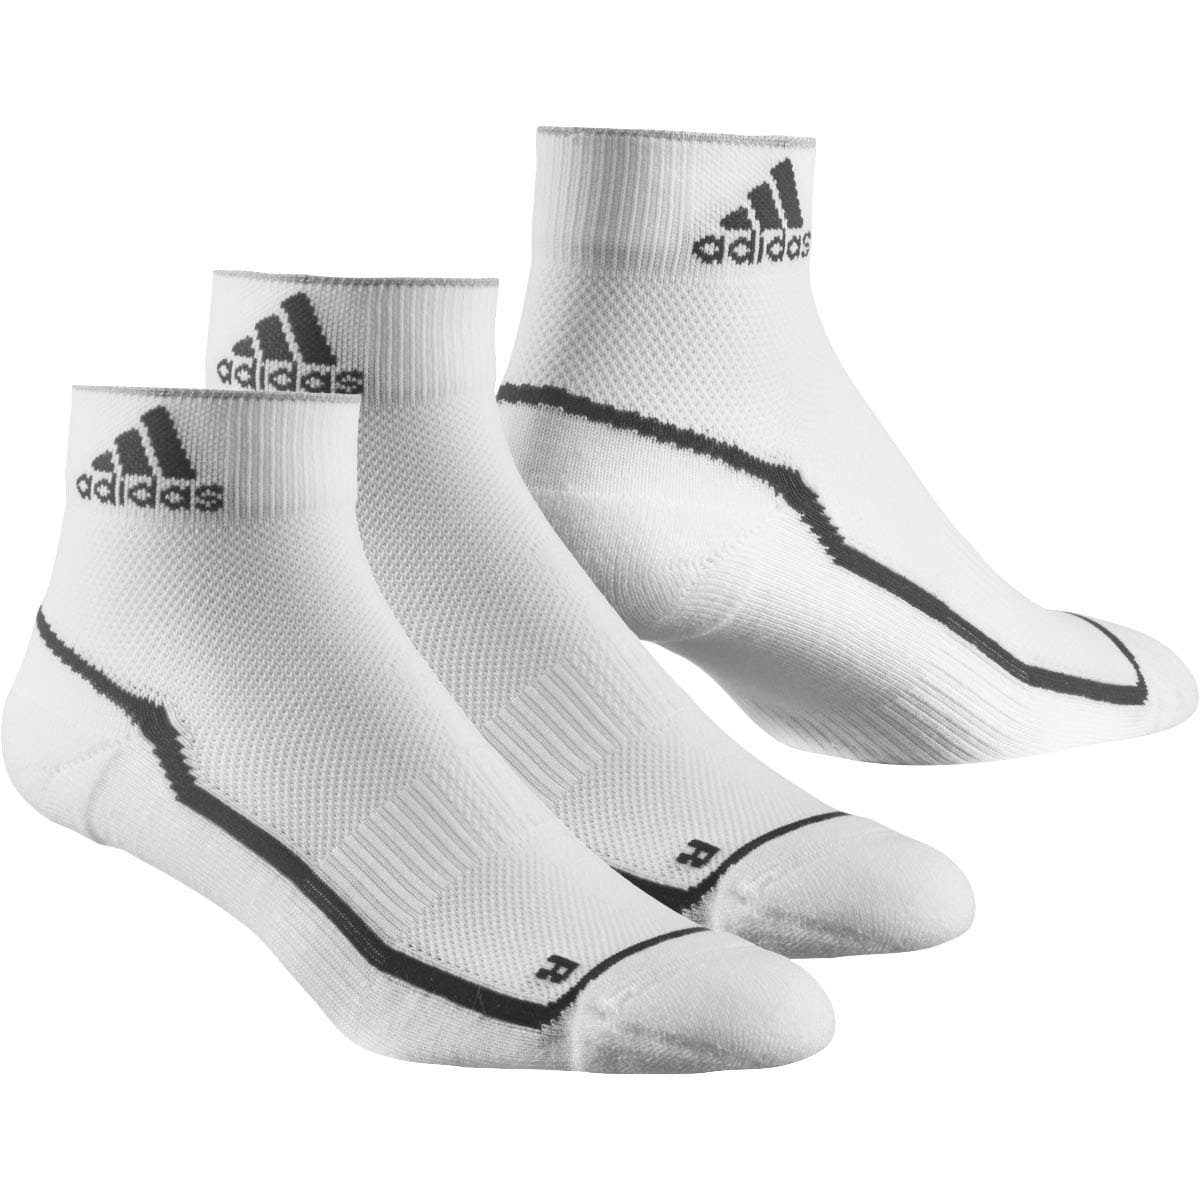 Ponožky adidas adizero cushioned ankle socks, 2 pairs